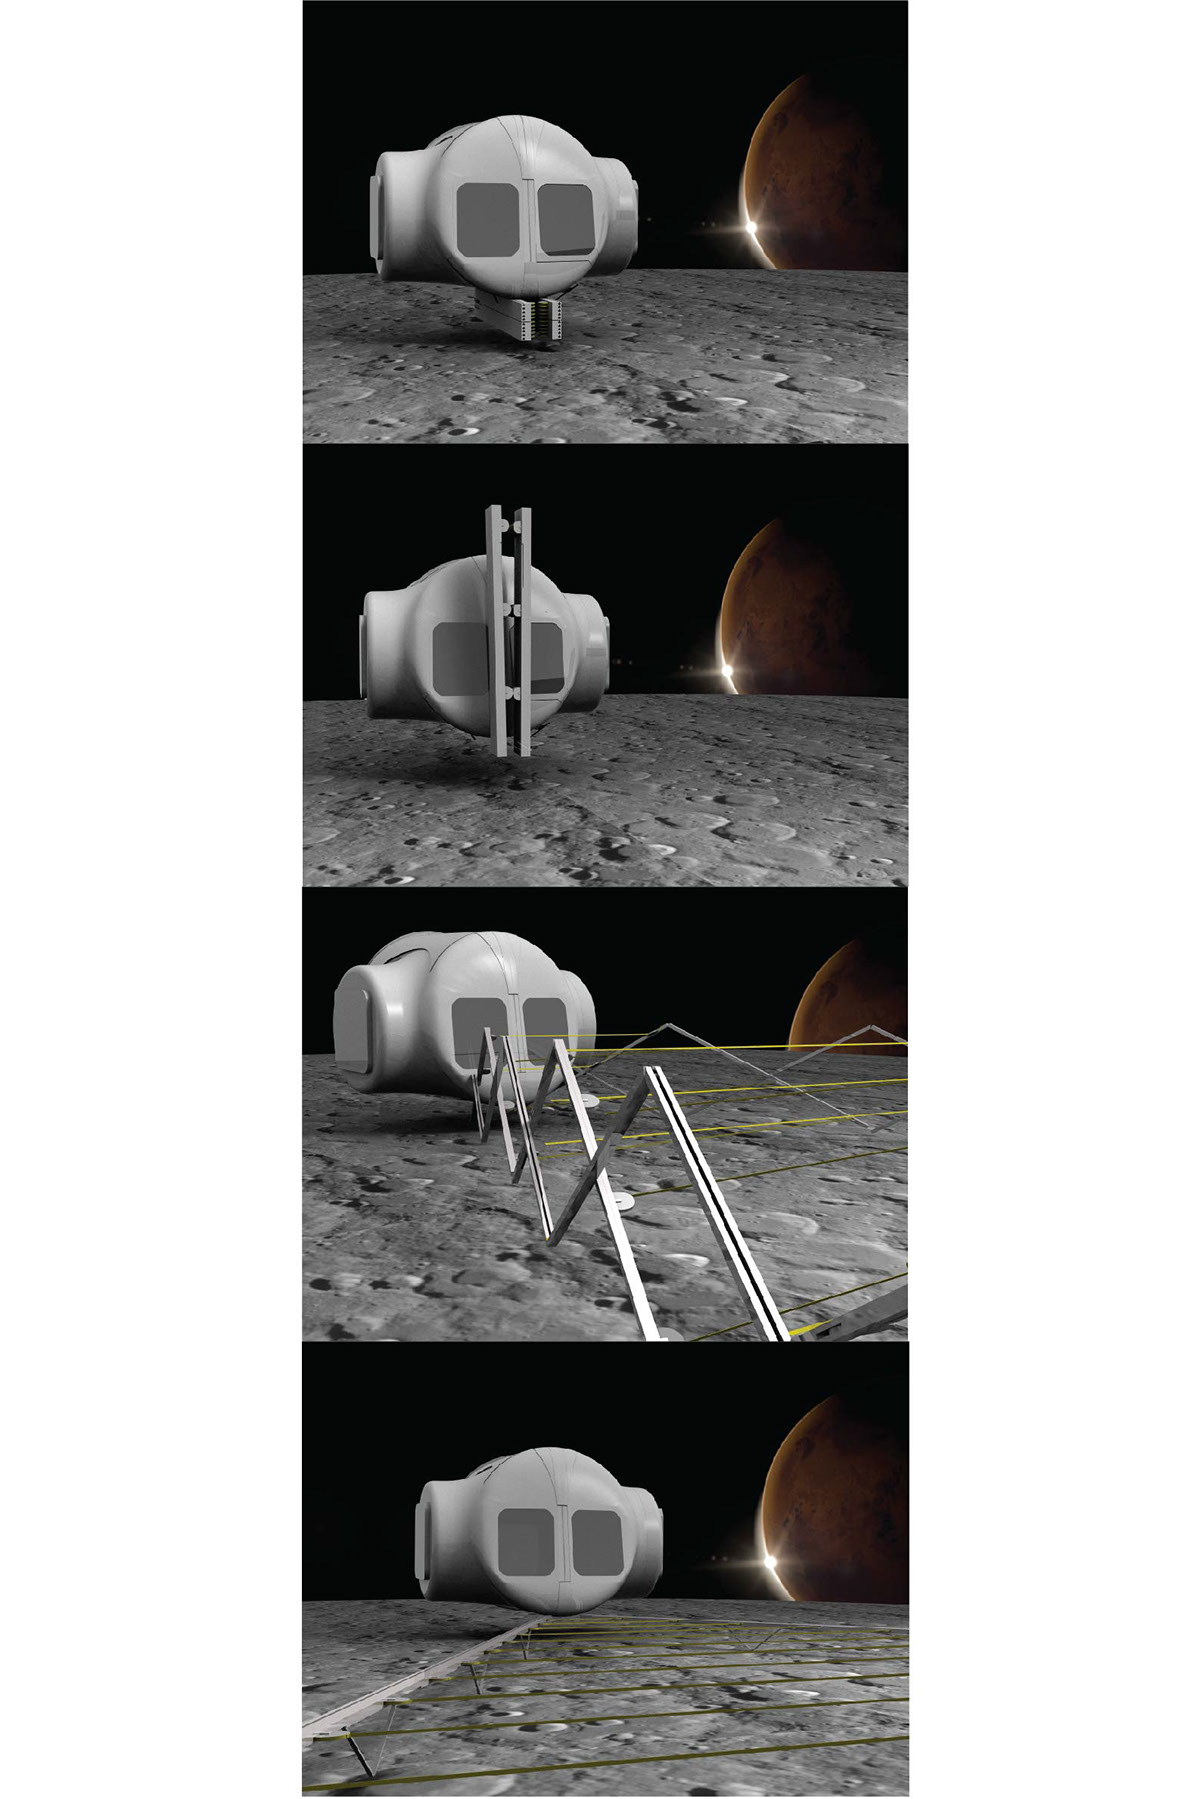 nasa PHOBOS grid exploration astronaut astronauta moon luna mars Marte fobos